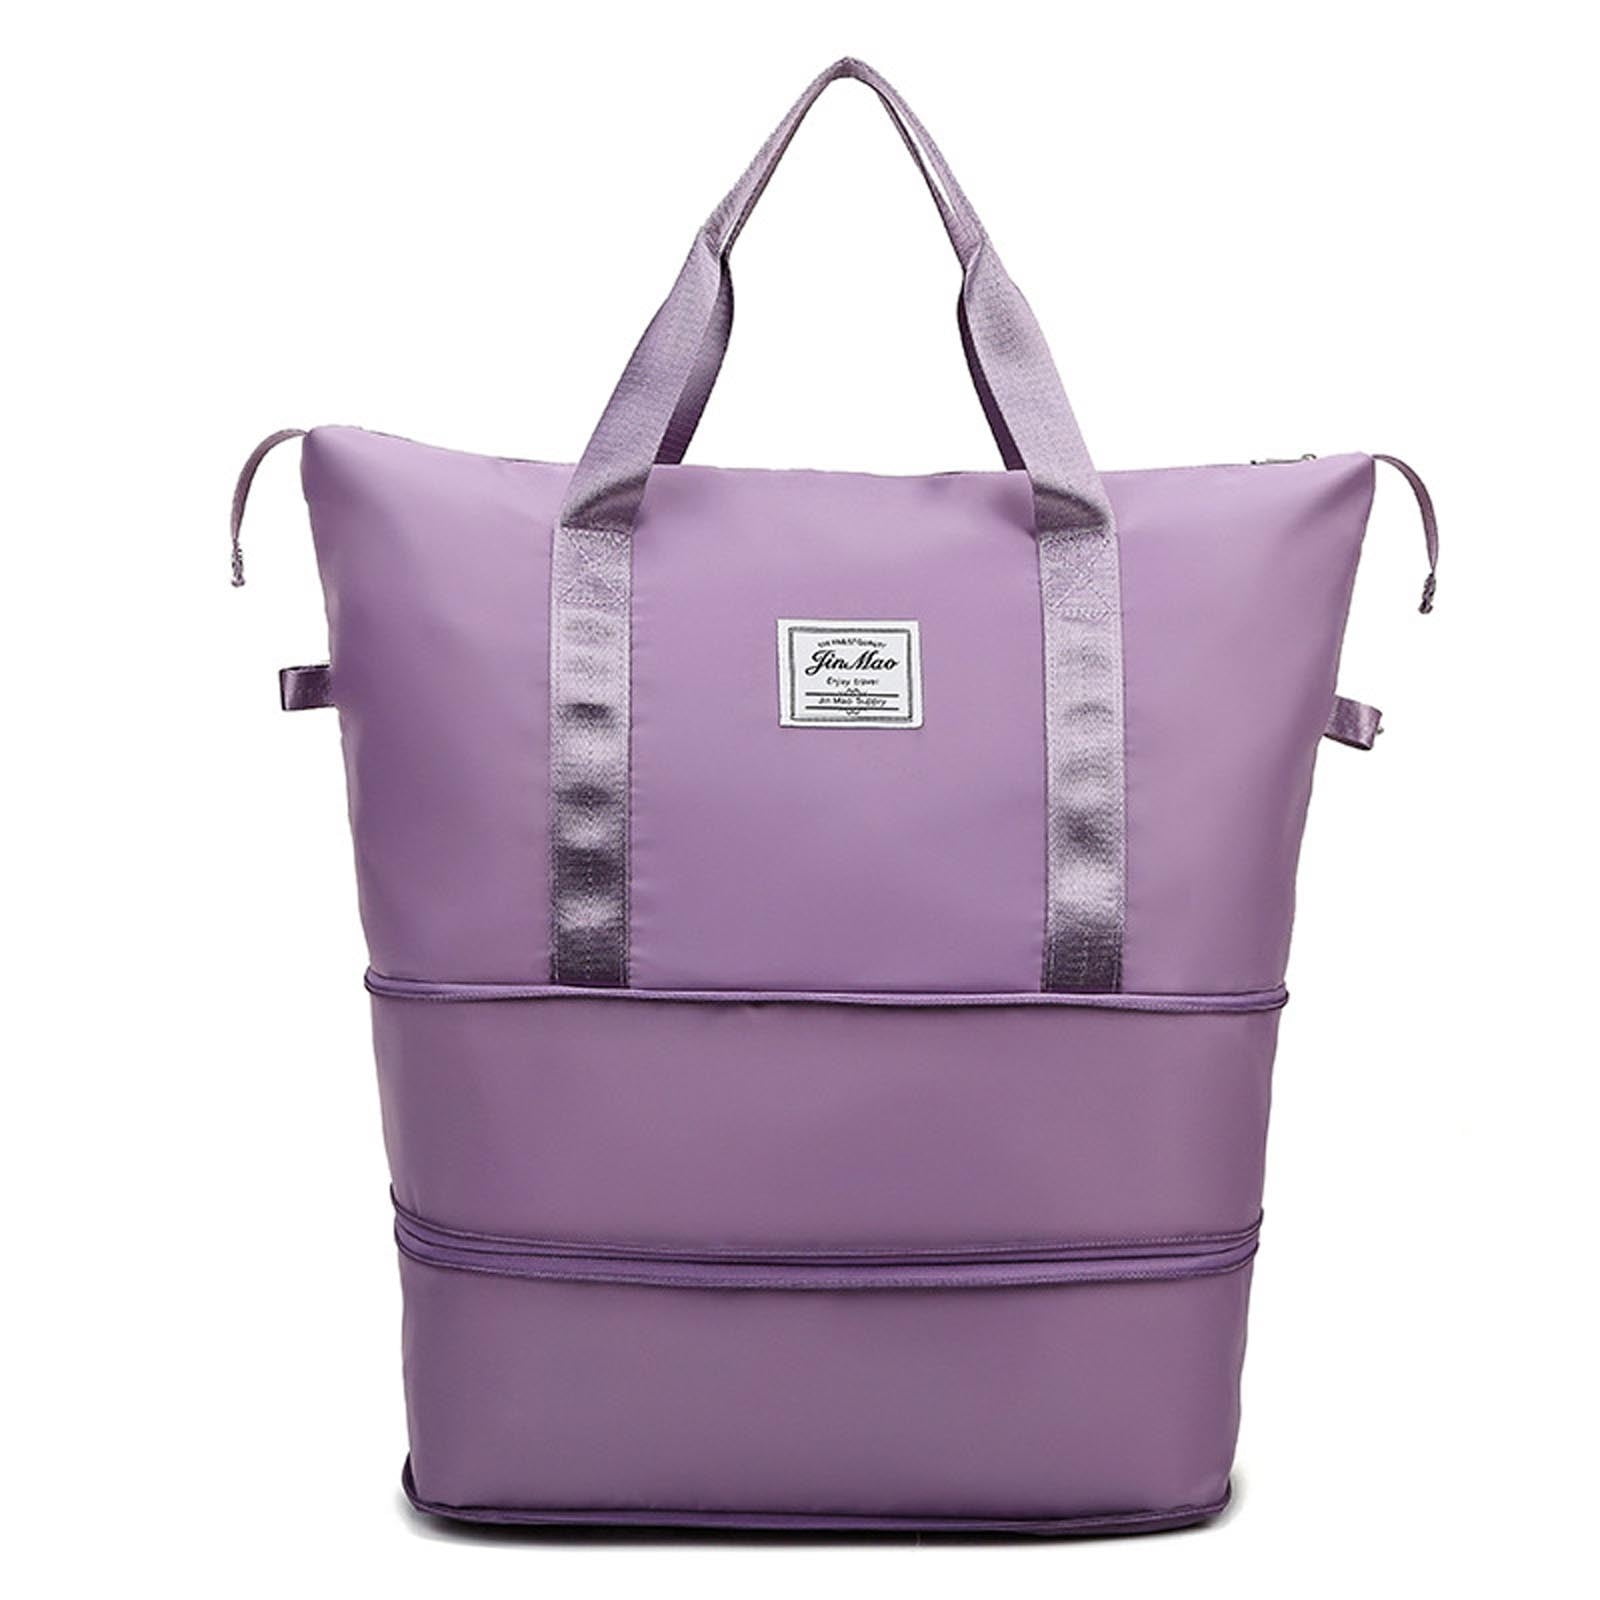 Travelon Wet/Dry 1 Quart Bag with Bottles, Purple, One Size